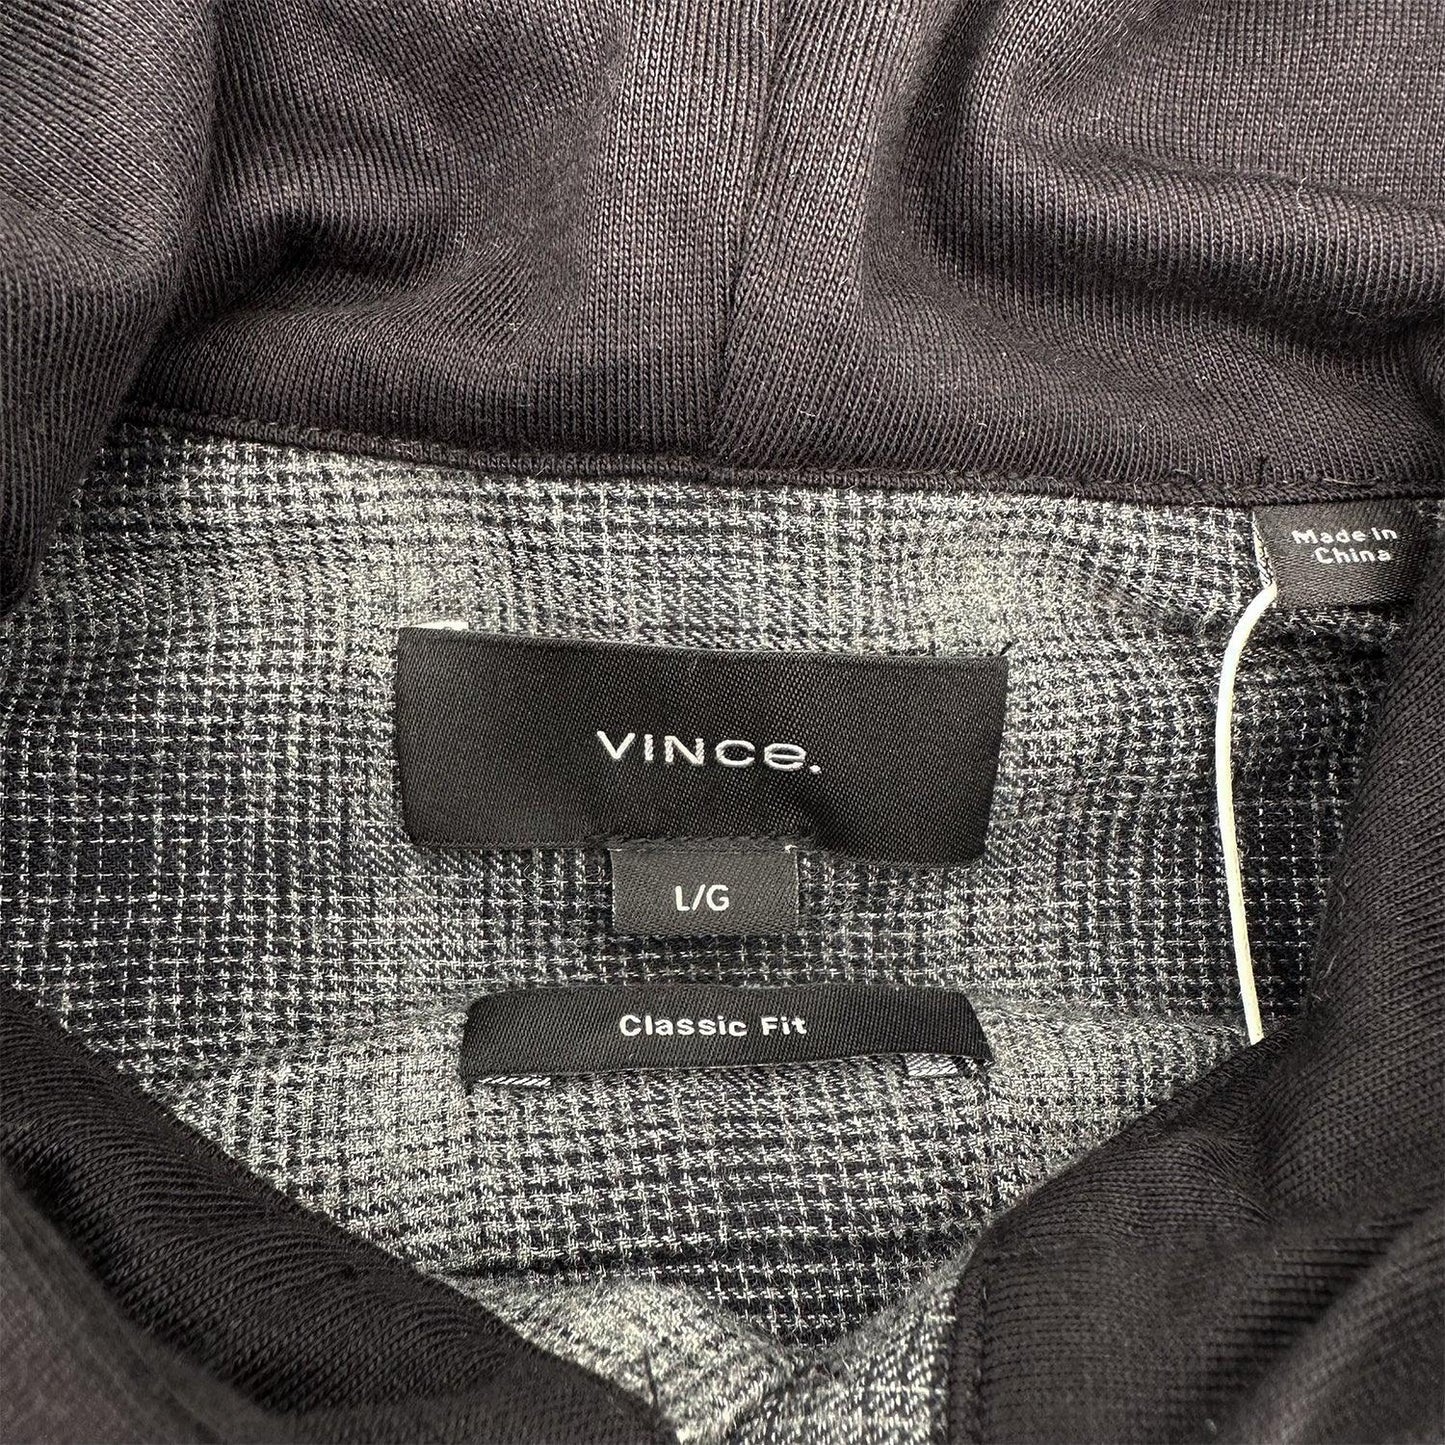 vince | men's tonal shadow plaid button-down hoodie in heather grey | size L - Home Revival Shop